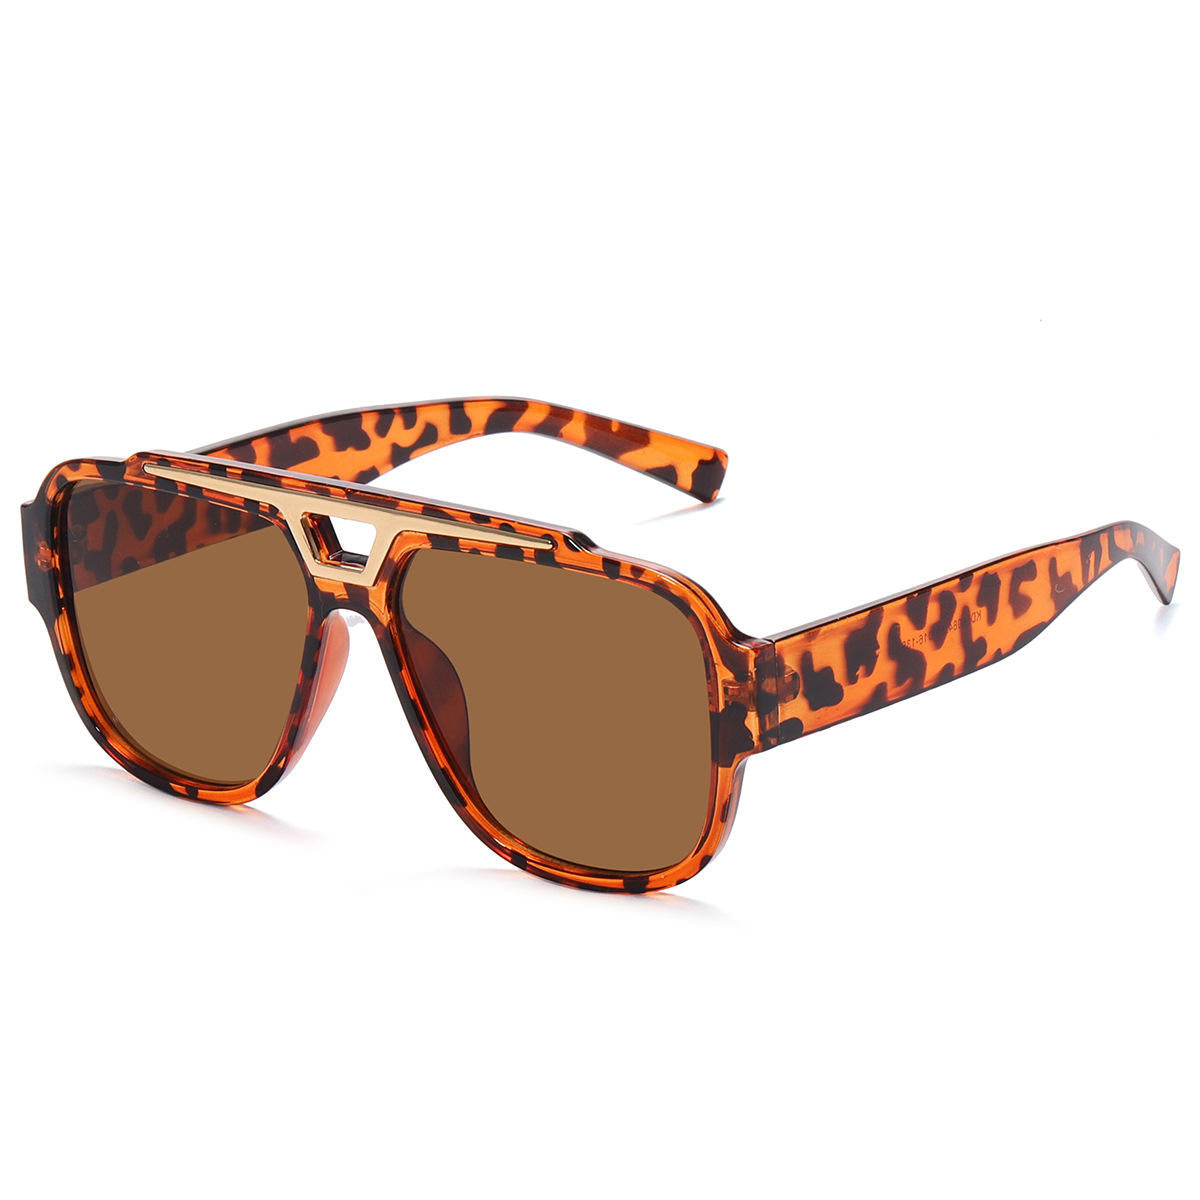 New classic Big Frame Trendy Fashion Sunglasses for Women